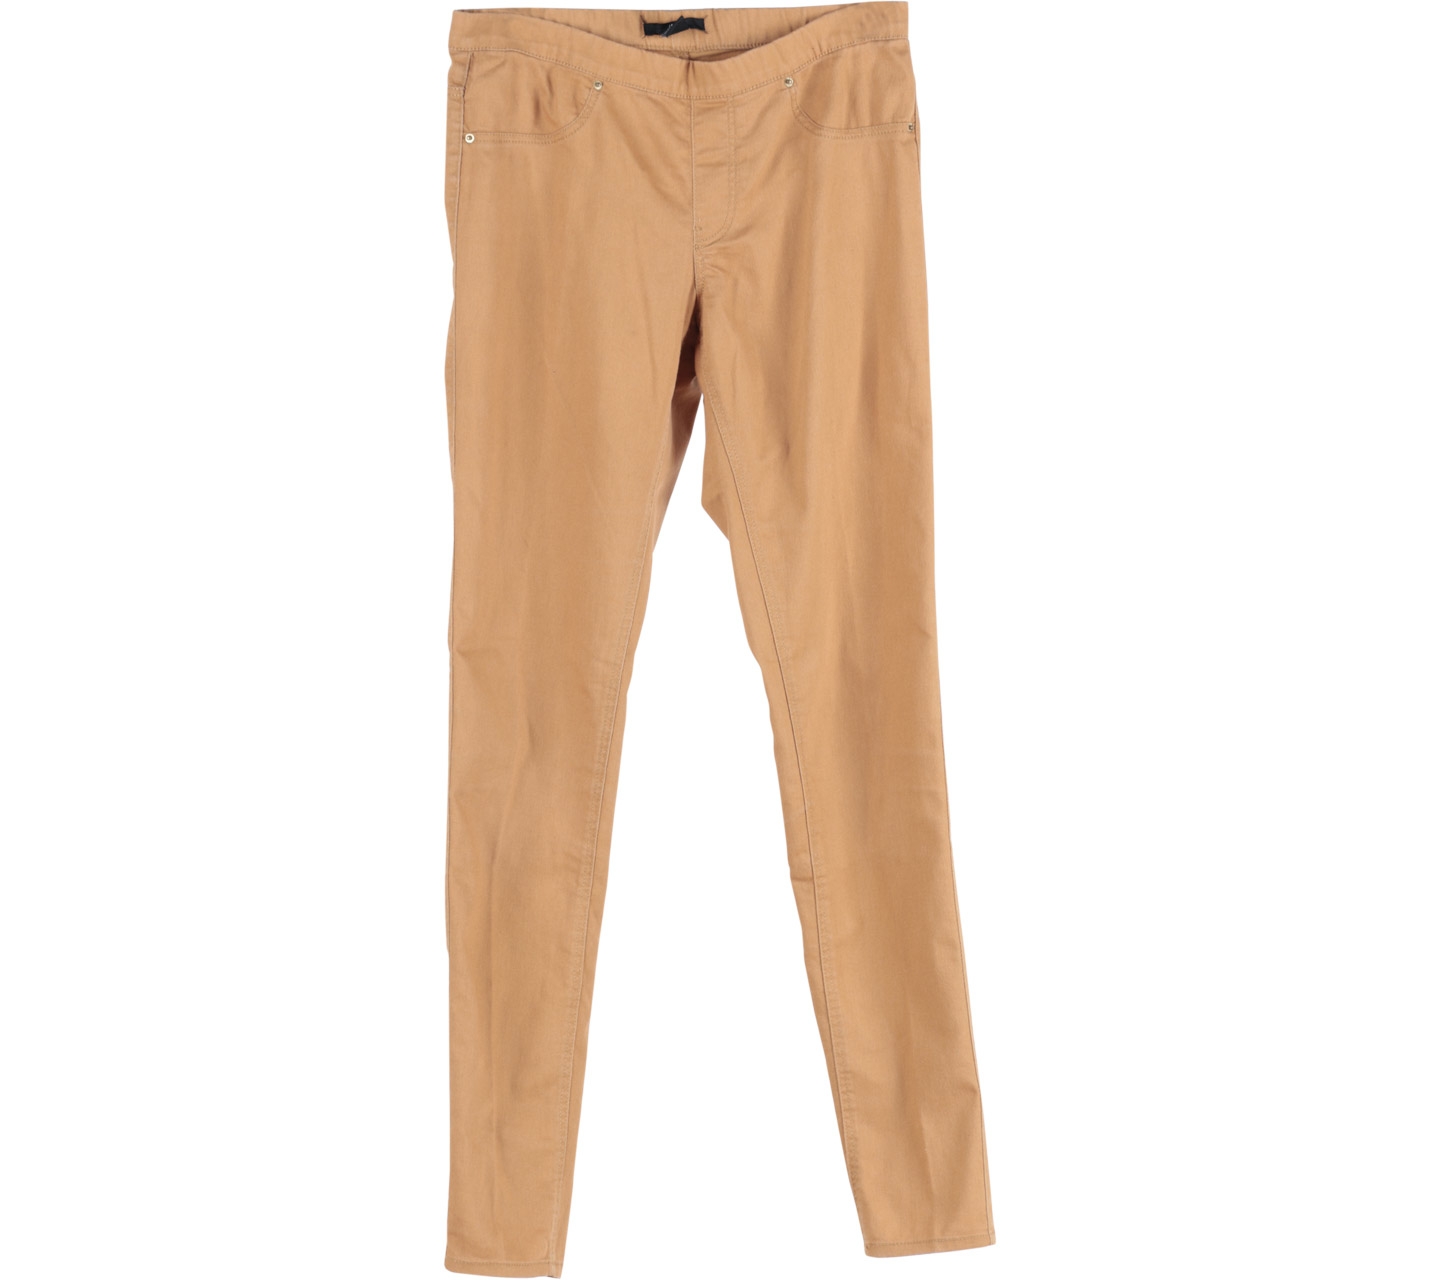 H&M Brown Pants